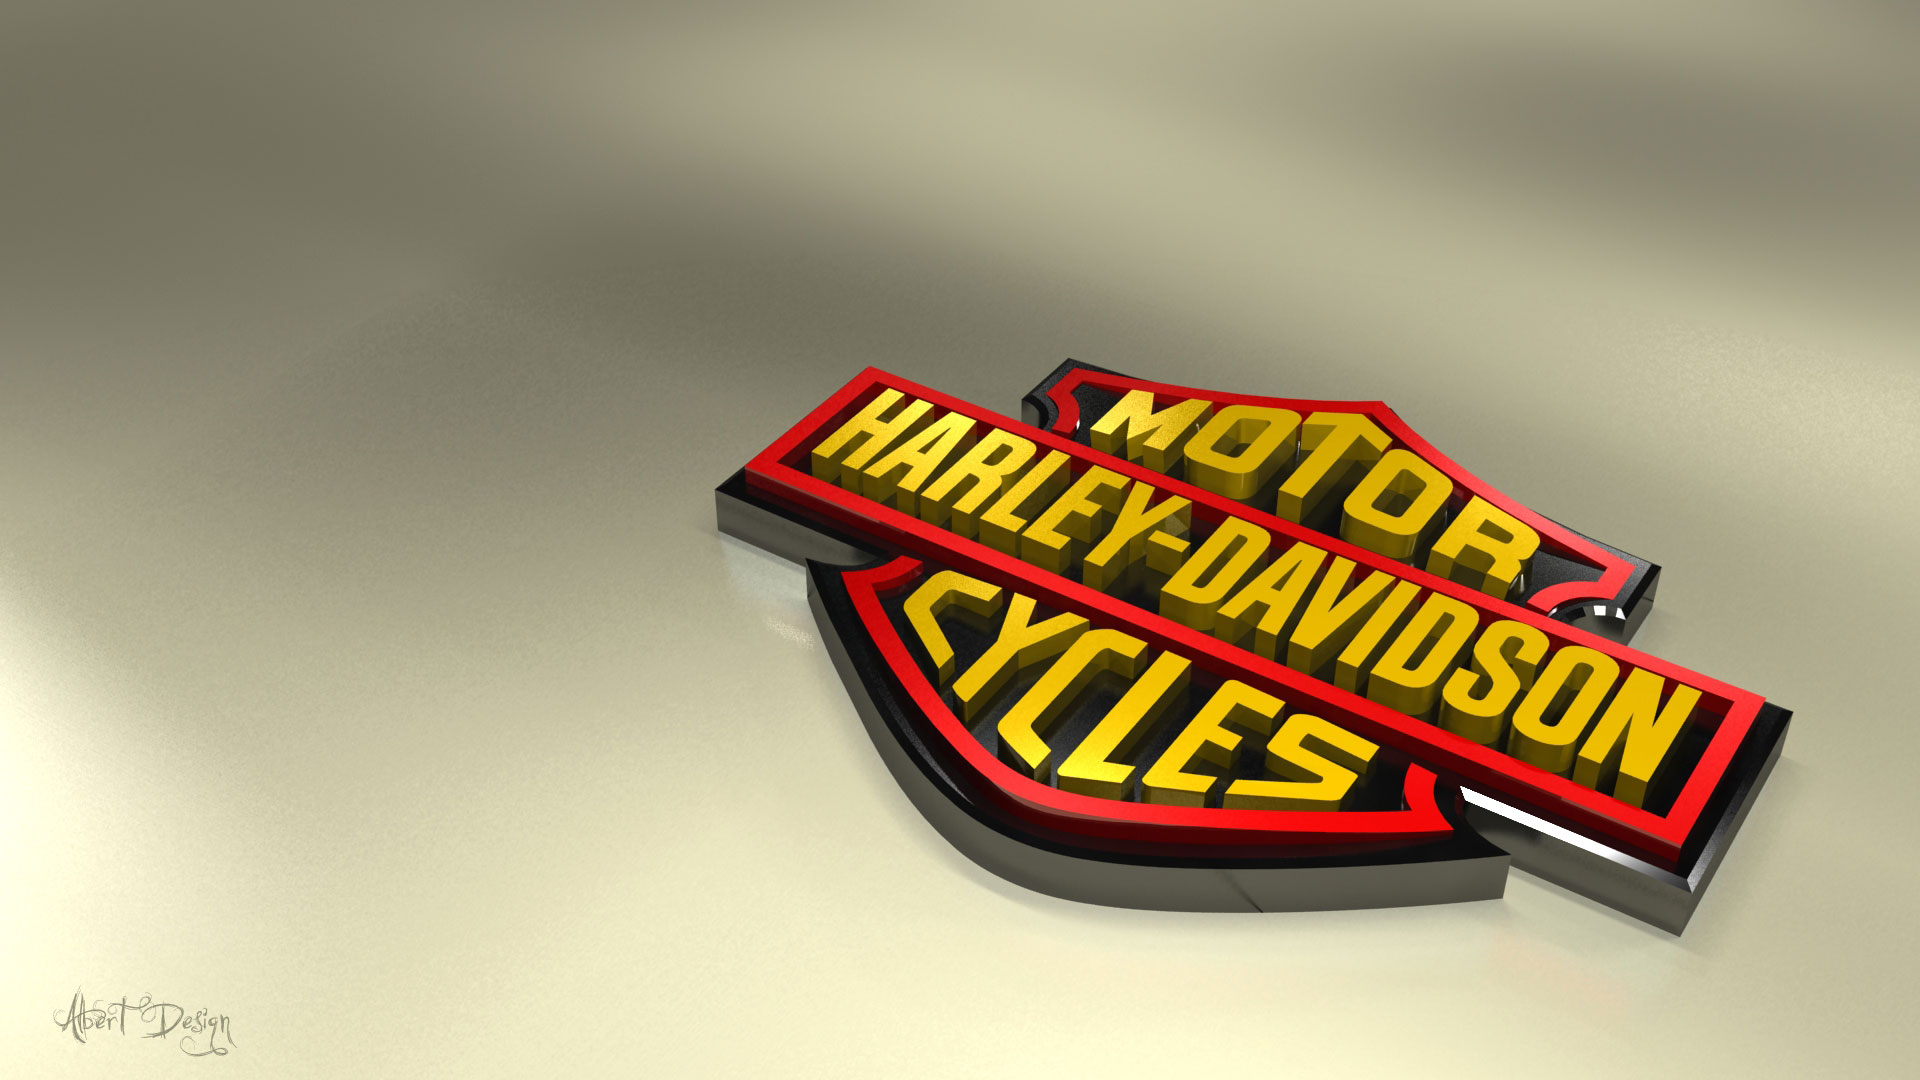 Harley Davidson Logo Wallpaper 7663 Hd Wallpapers in Logos   Imagesci 1920x1080